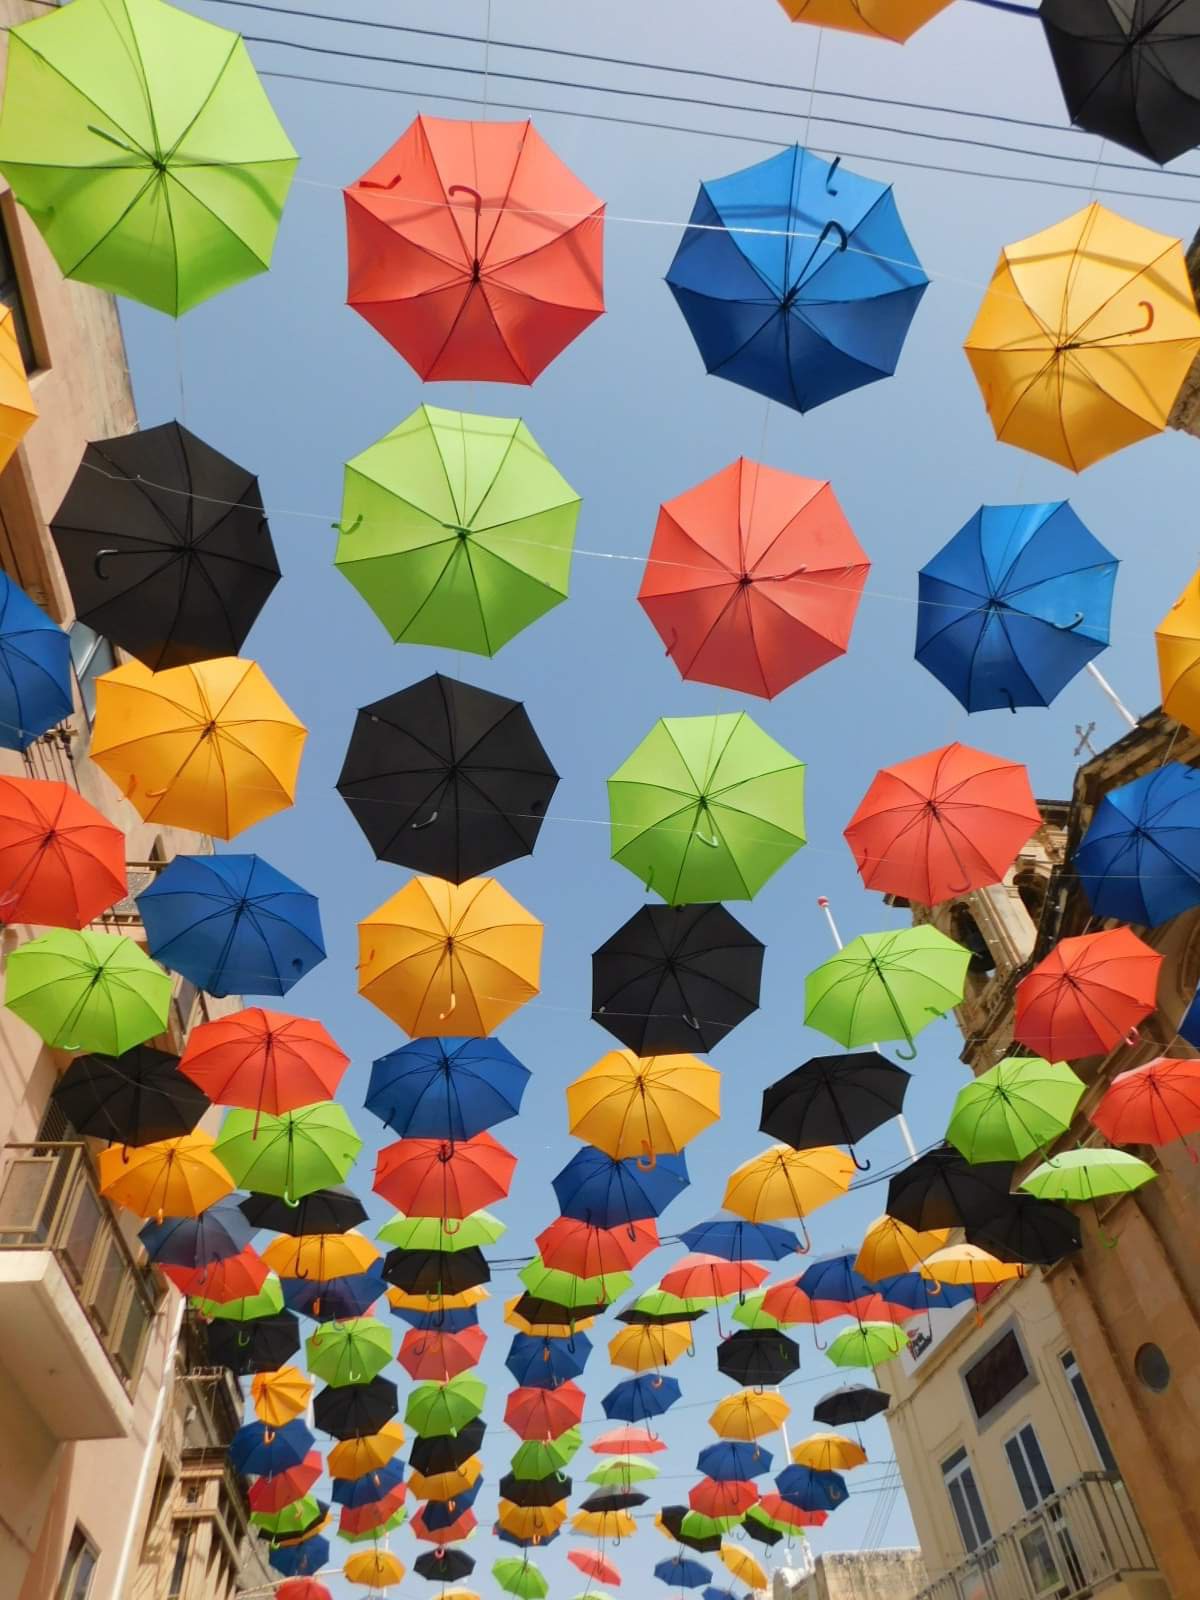 Umbrella Street